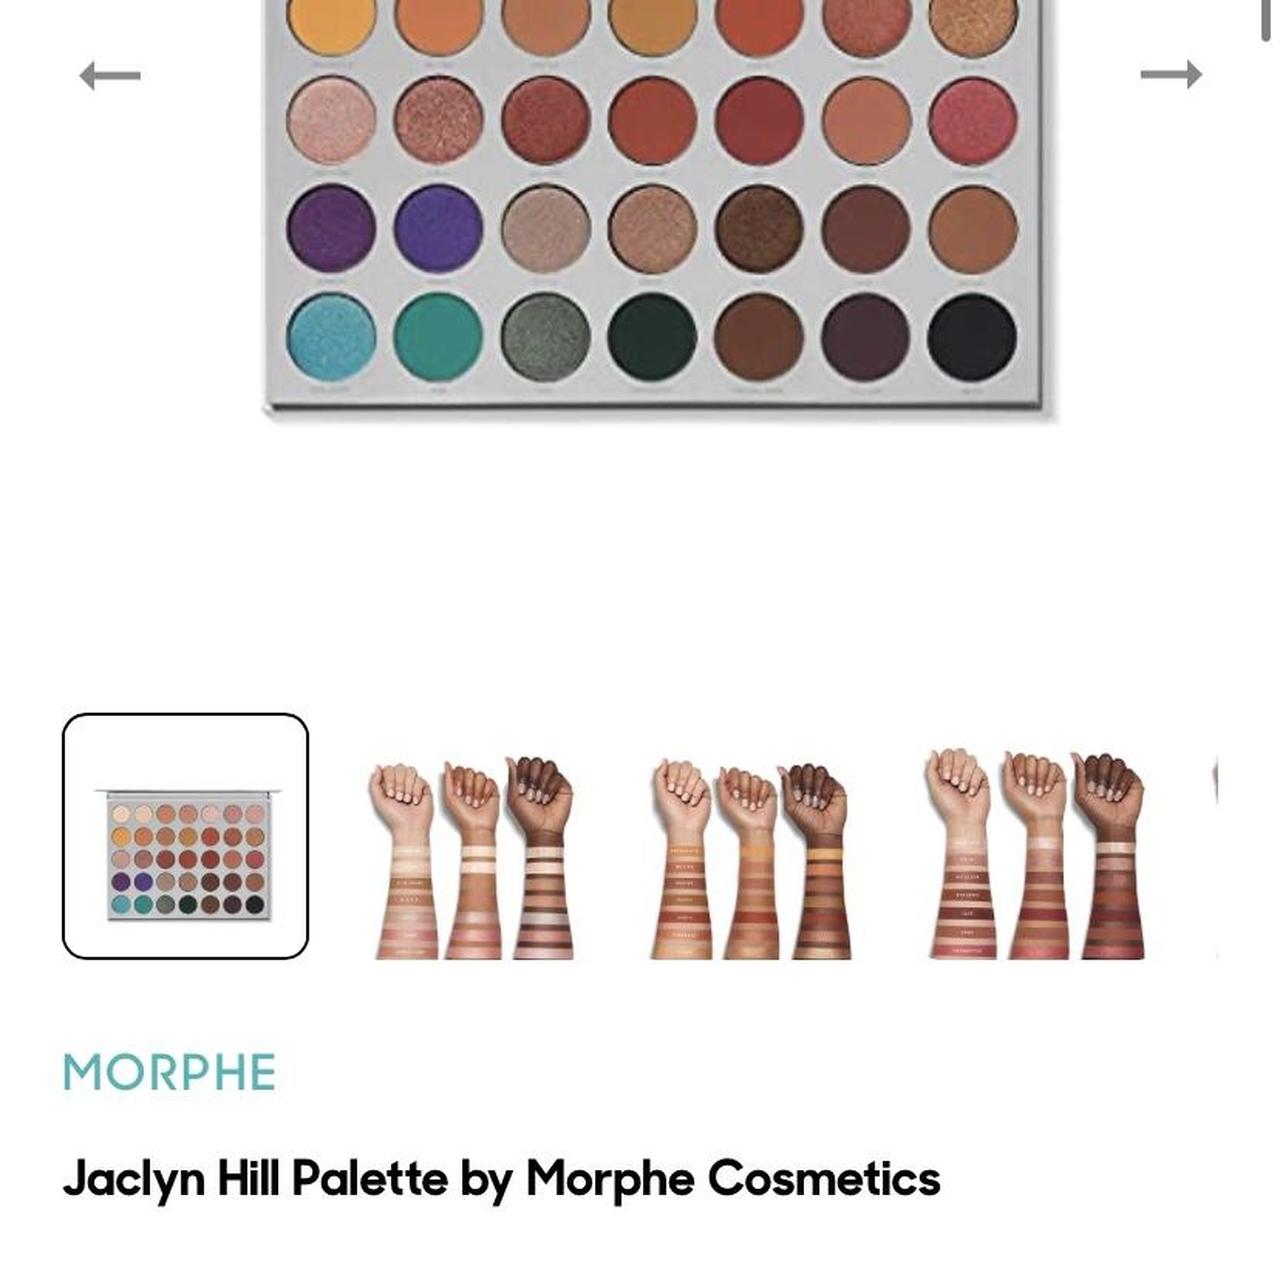 Jaclyn Hill Palette by Morphe Cosmetics